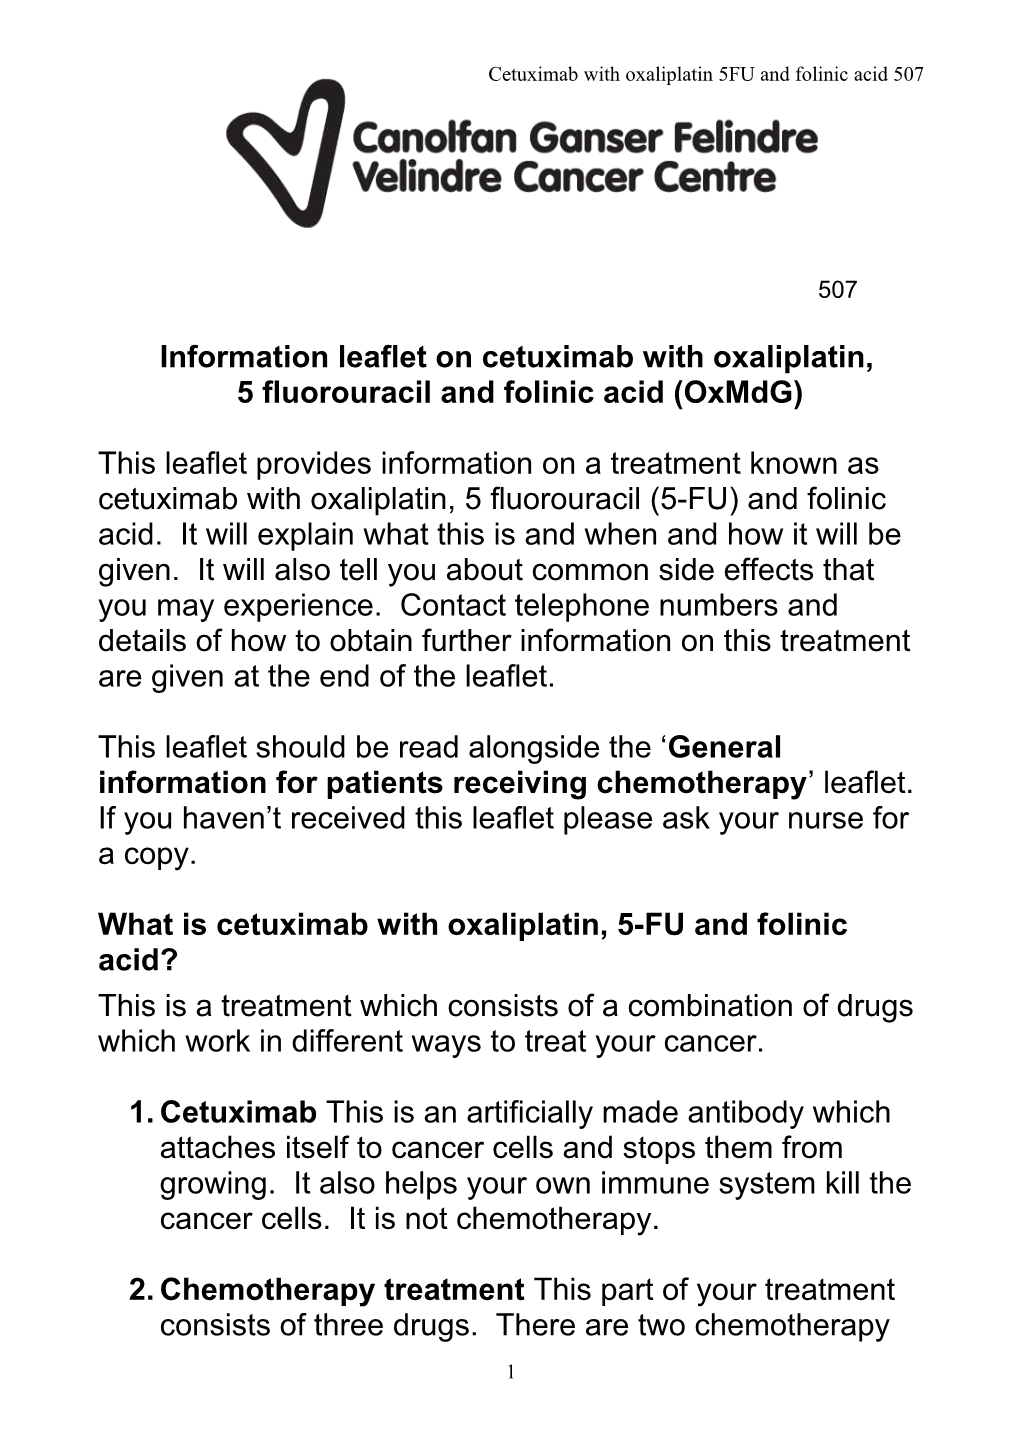 Information Leaflet on Cetuximab with Oxaliplatin